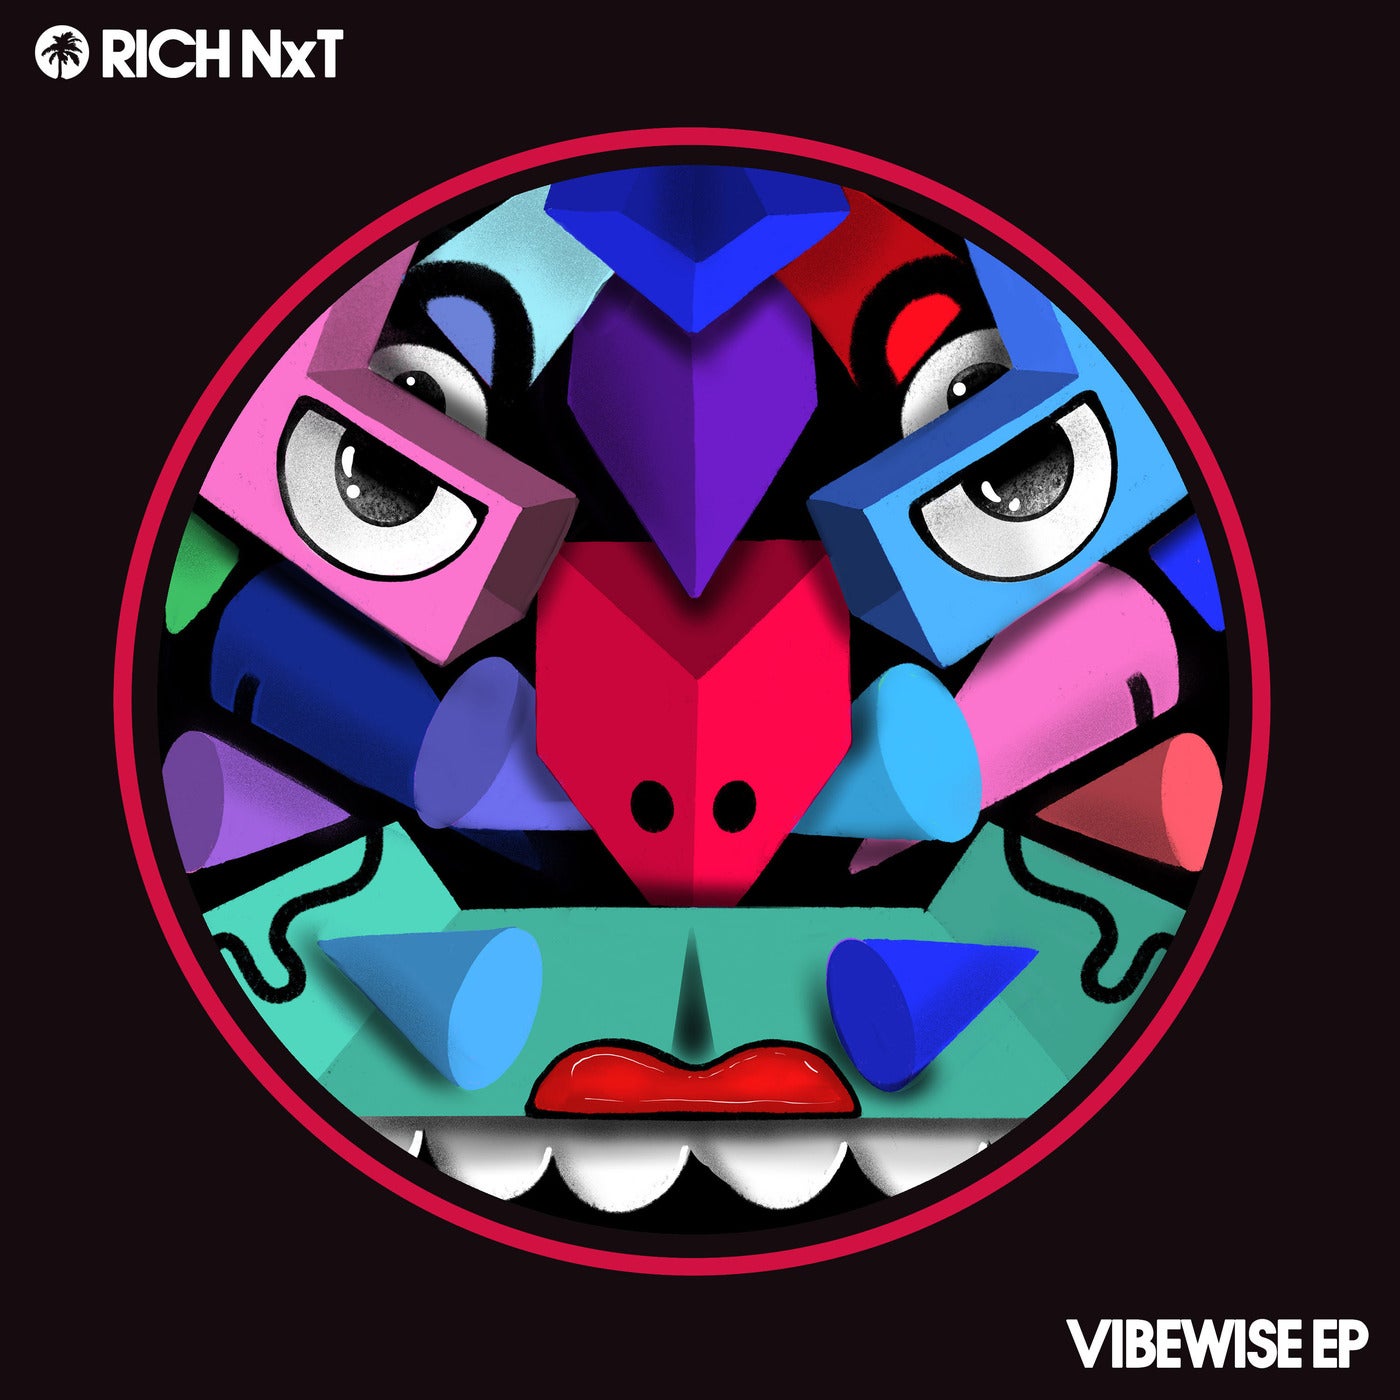 Rich NxT – Vibewise EP [HOTC180]